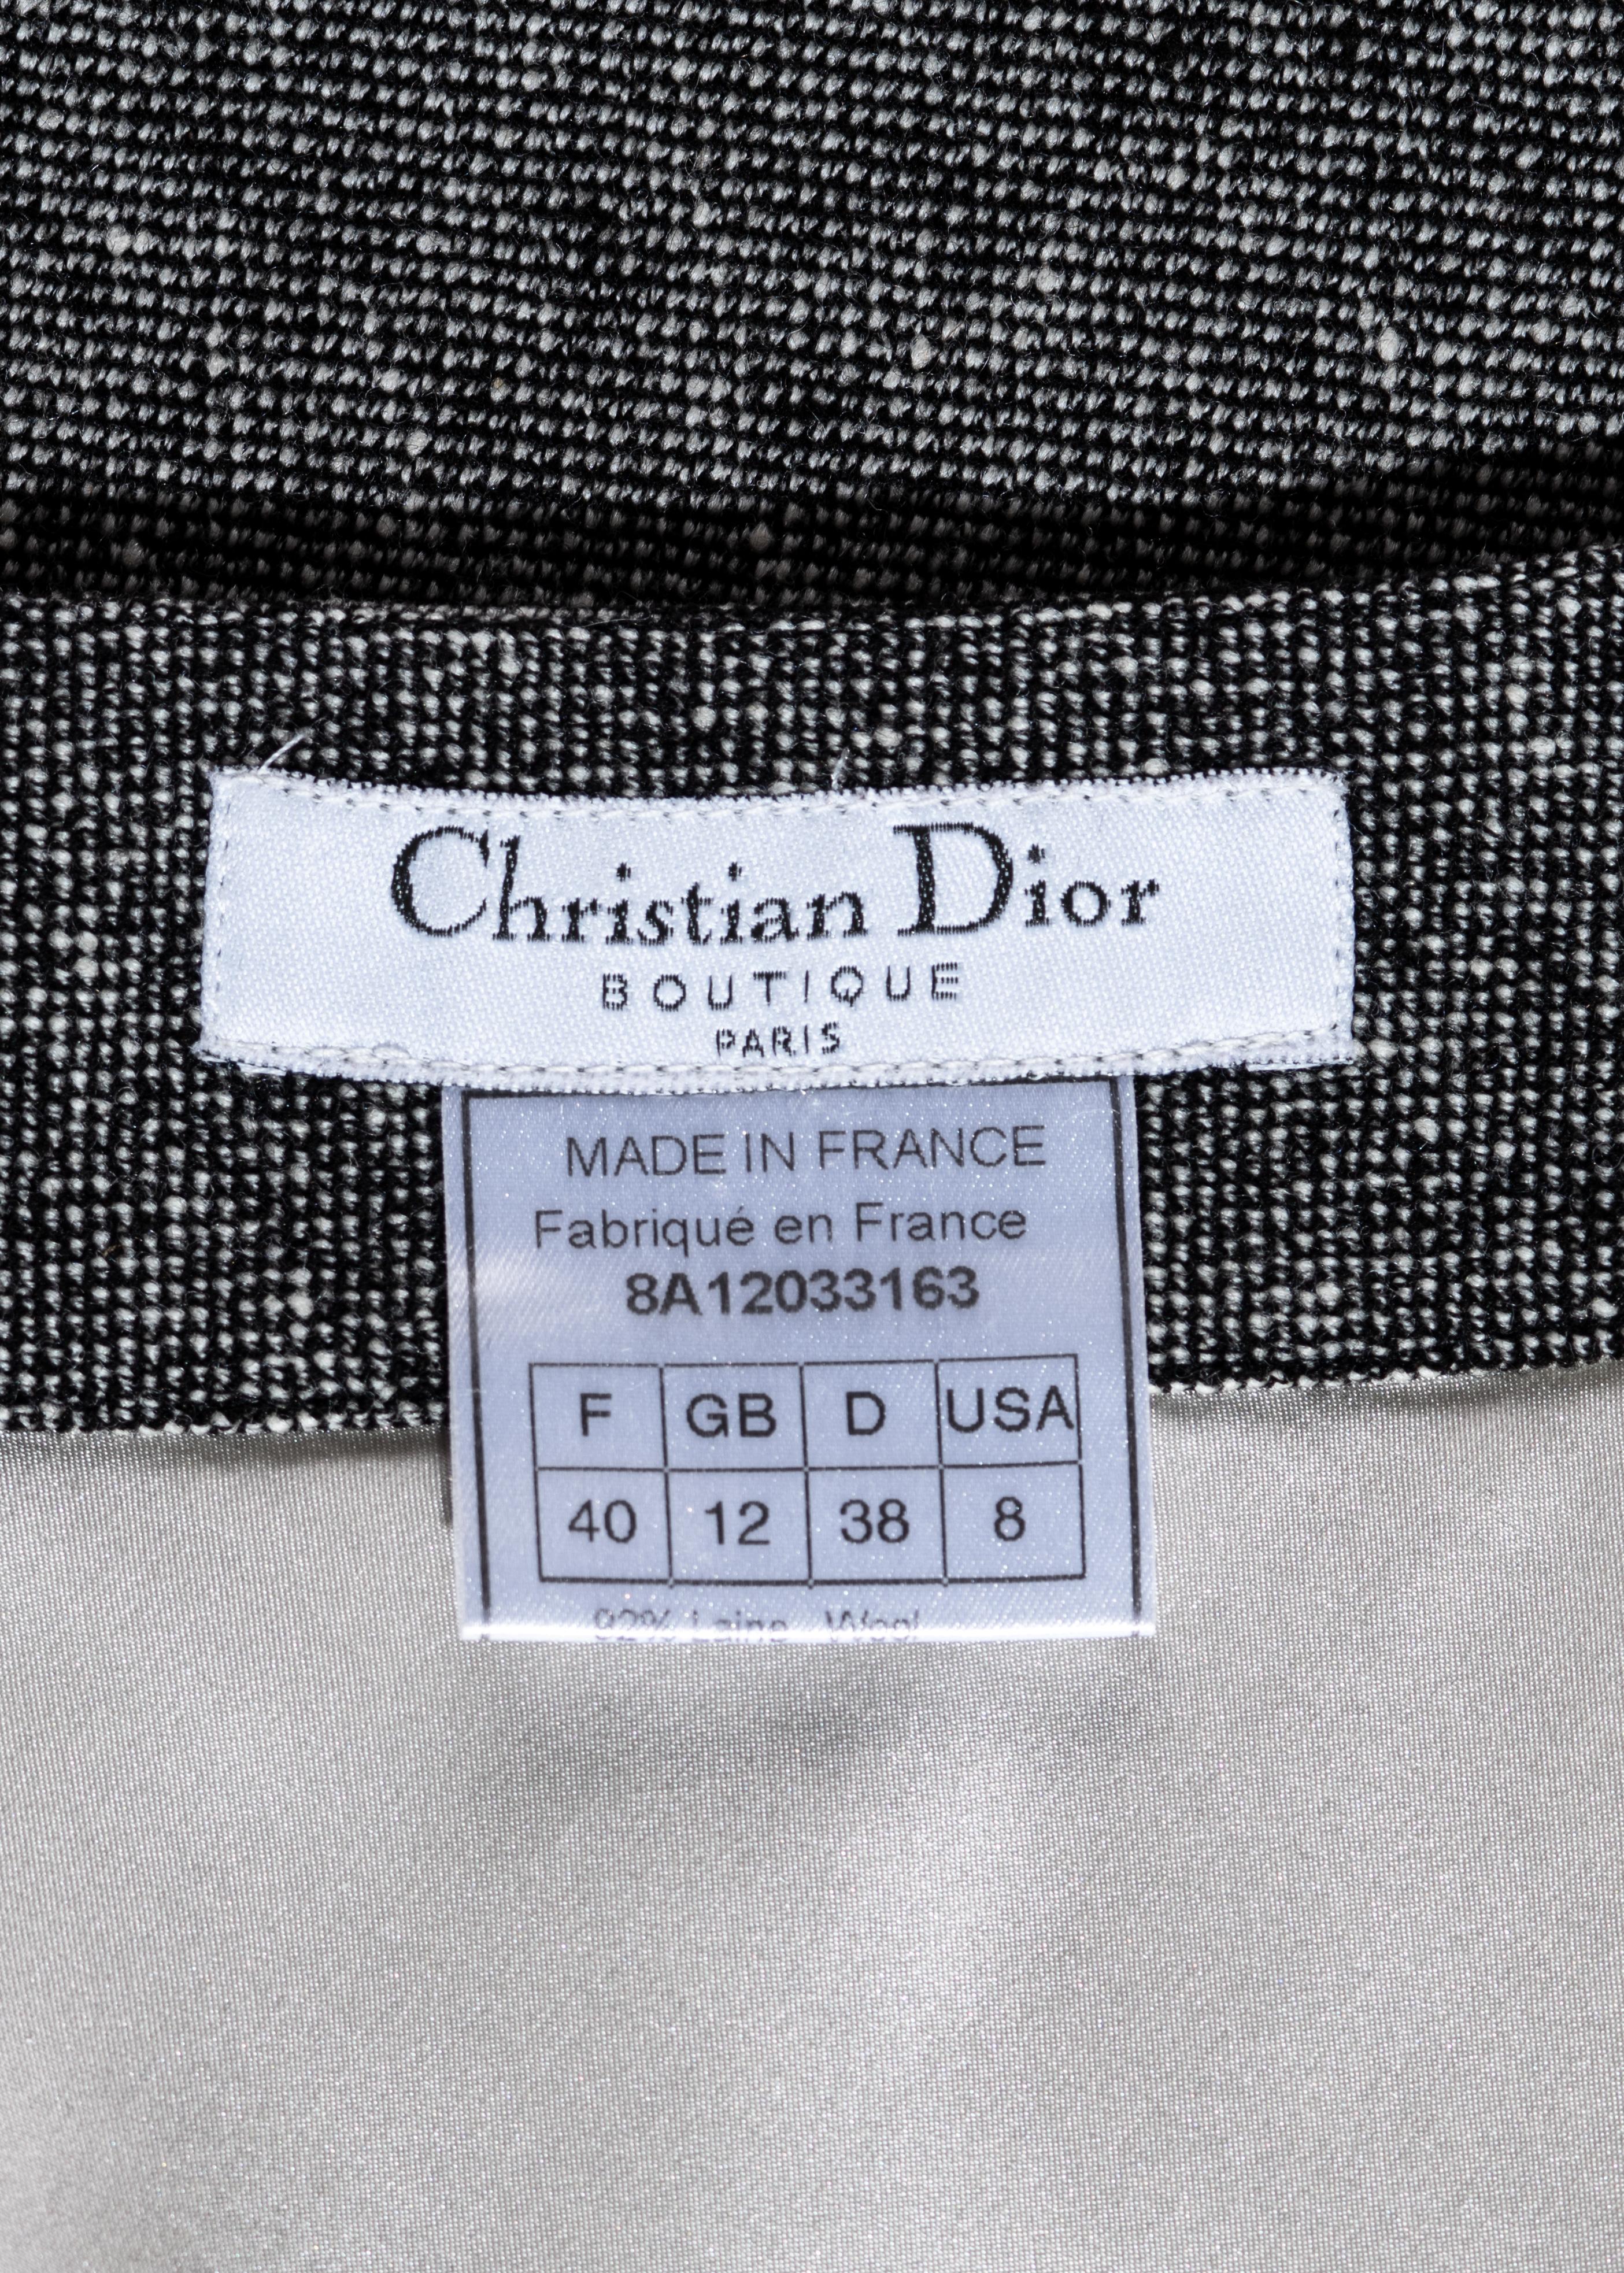 Christian Dior by John Galliano grey tweed maxi skirt suit with fox fur, fw 1998 4